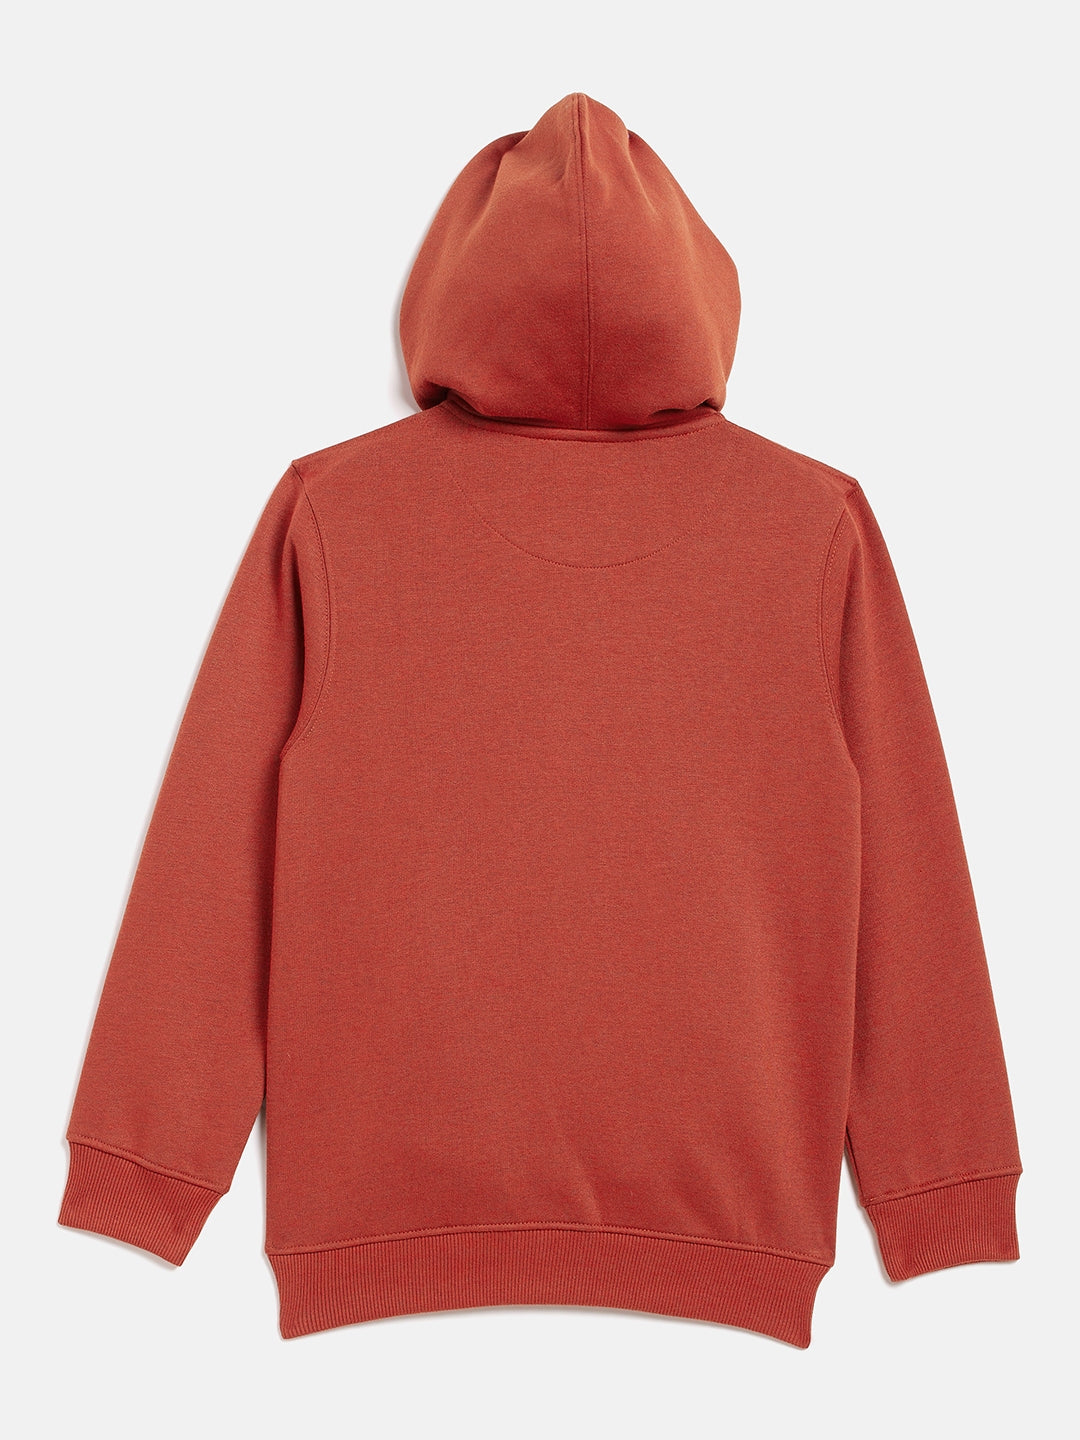 Red Hooded Sweatshirt - Boys Sweatshirts